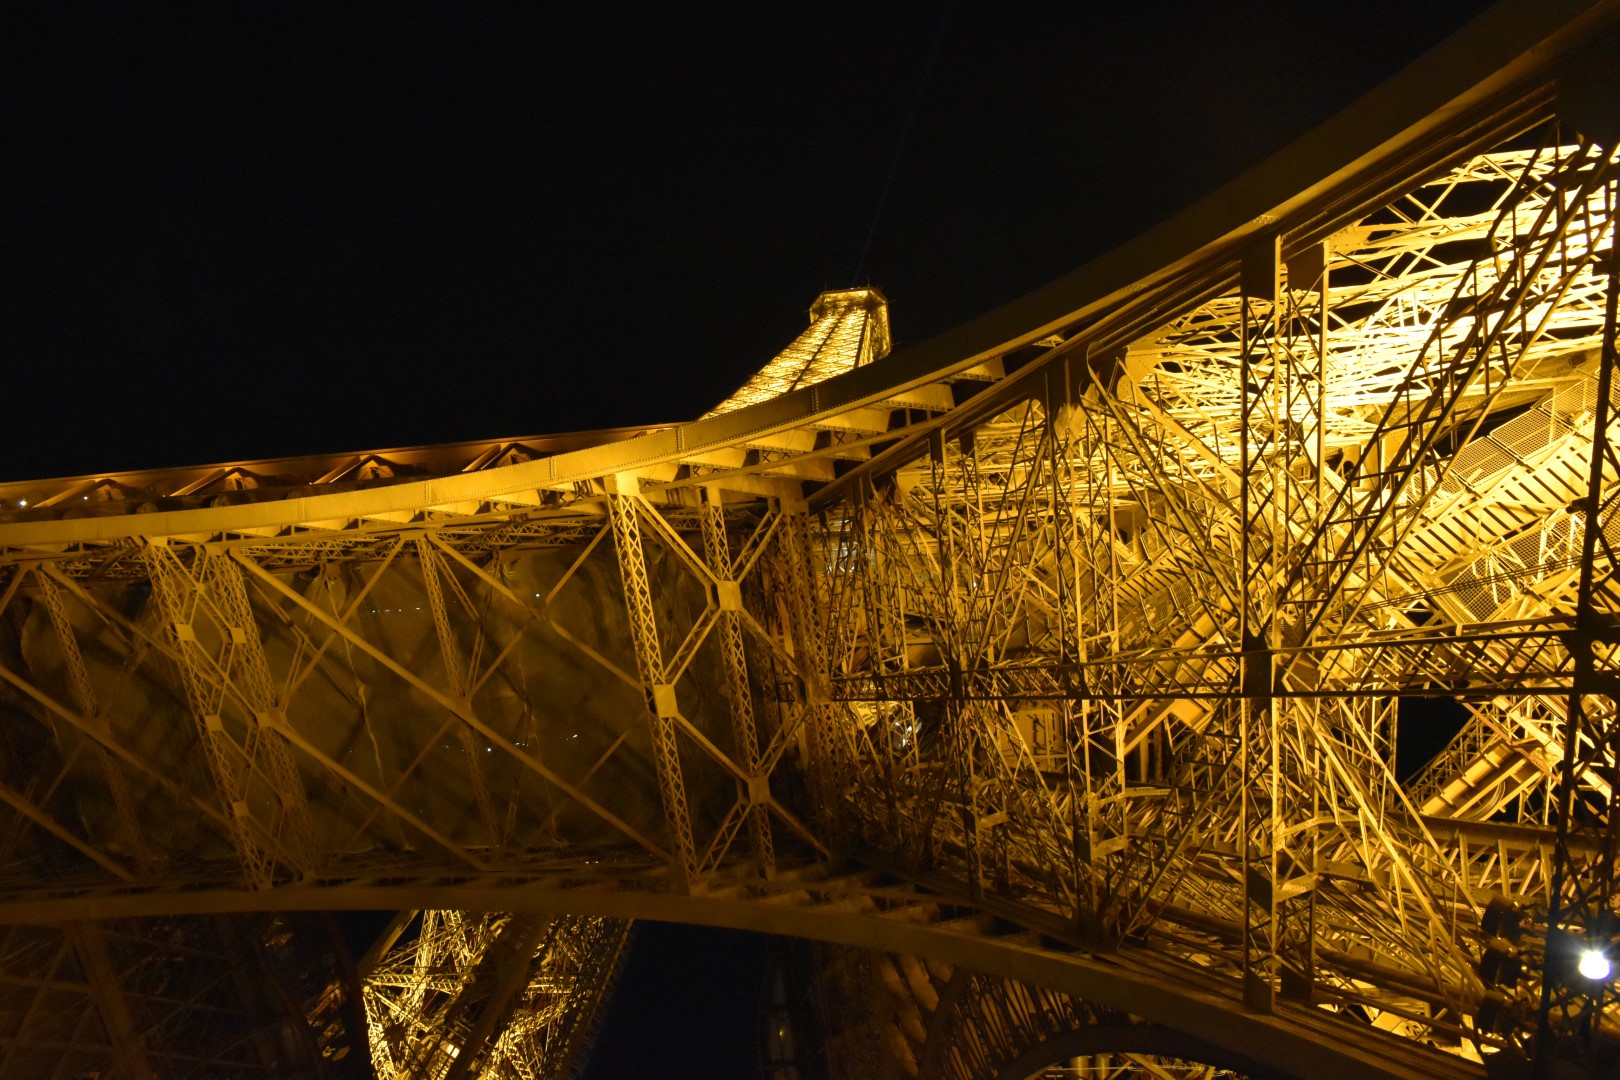 Bottom of the Eiffel Tower, Paris